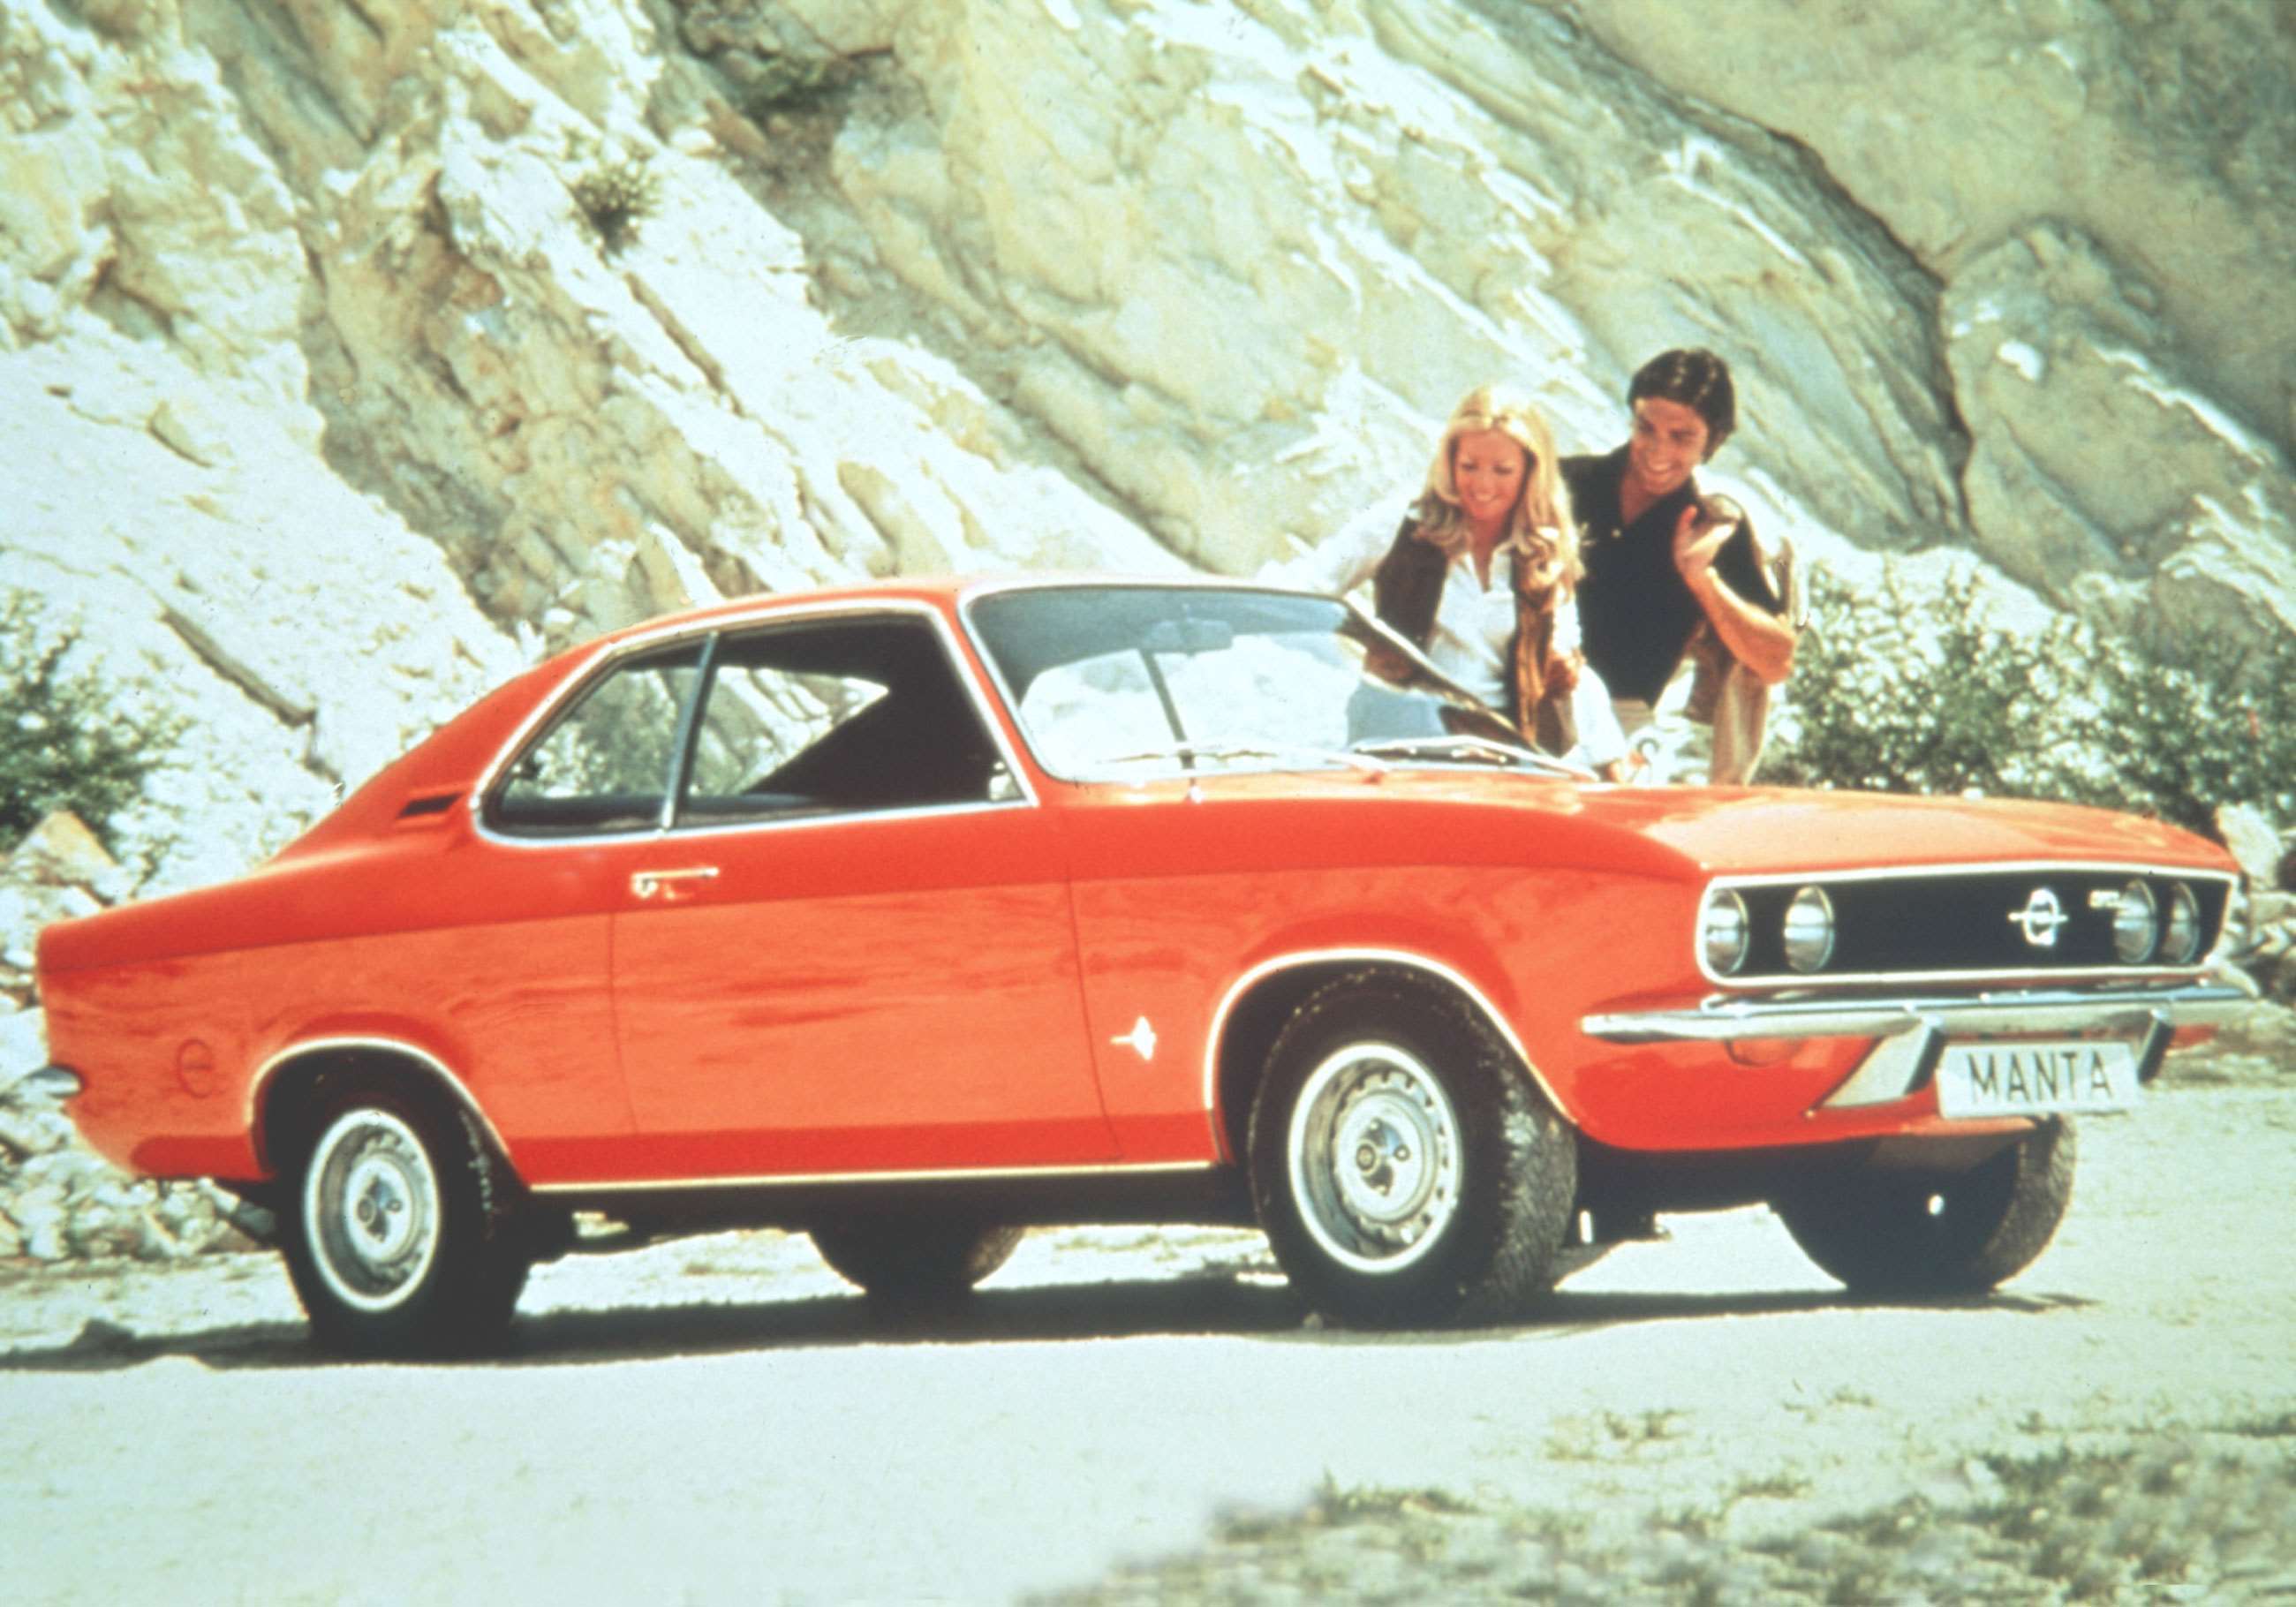 cars-from-1970-13-opel-manta-goodwood-10012020.jpg